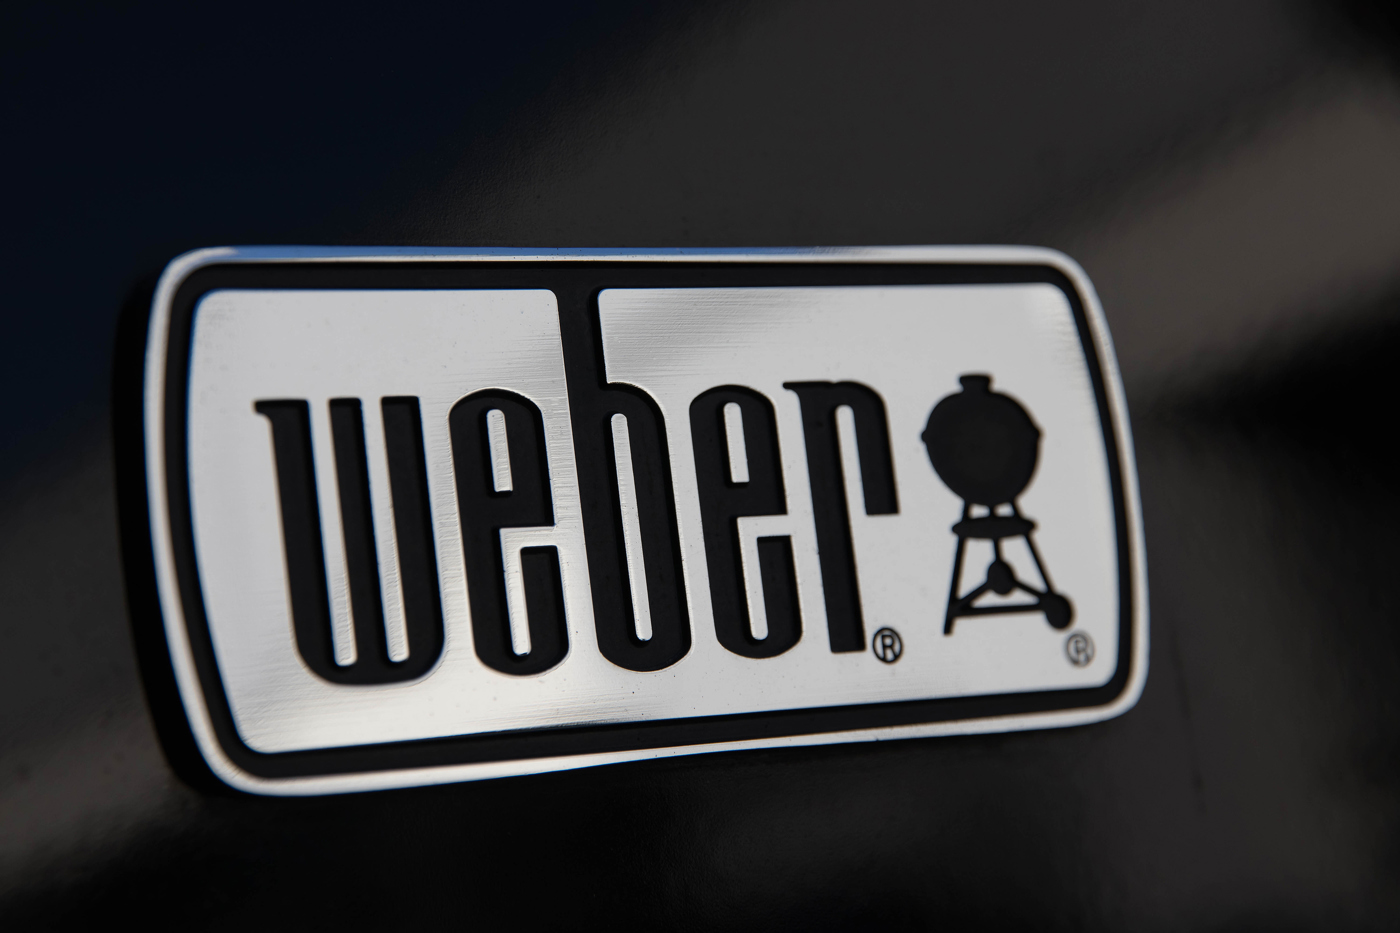 Weber stock, WEBR stock, Weber stock news, WEBR stock news